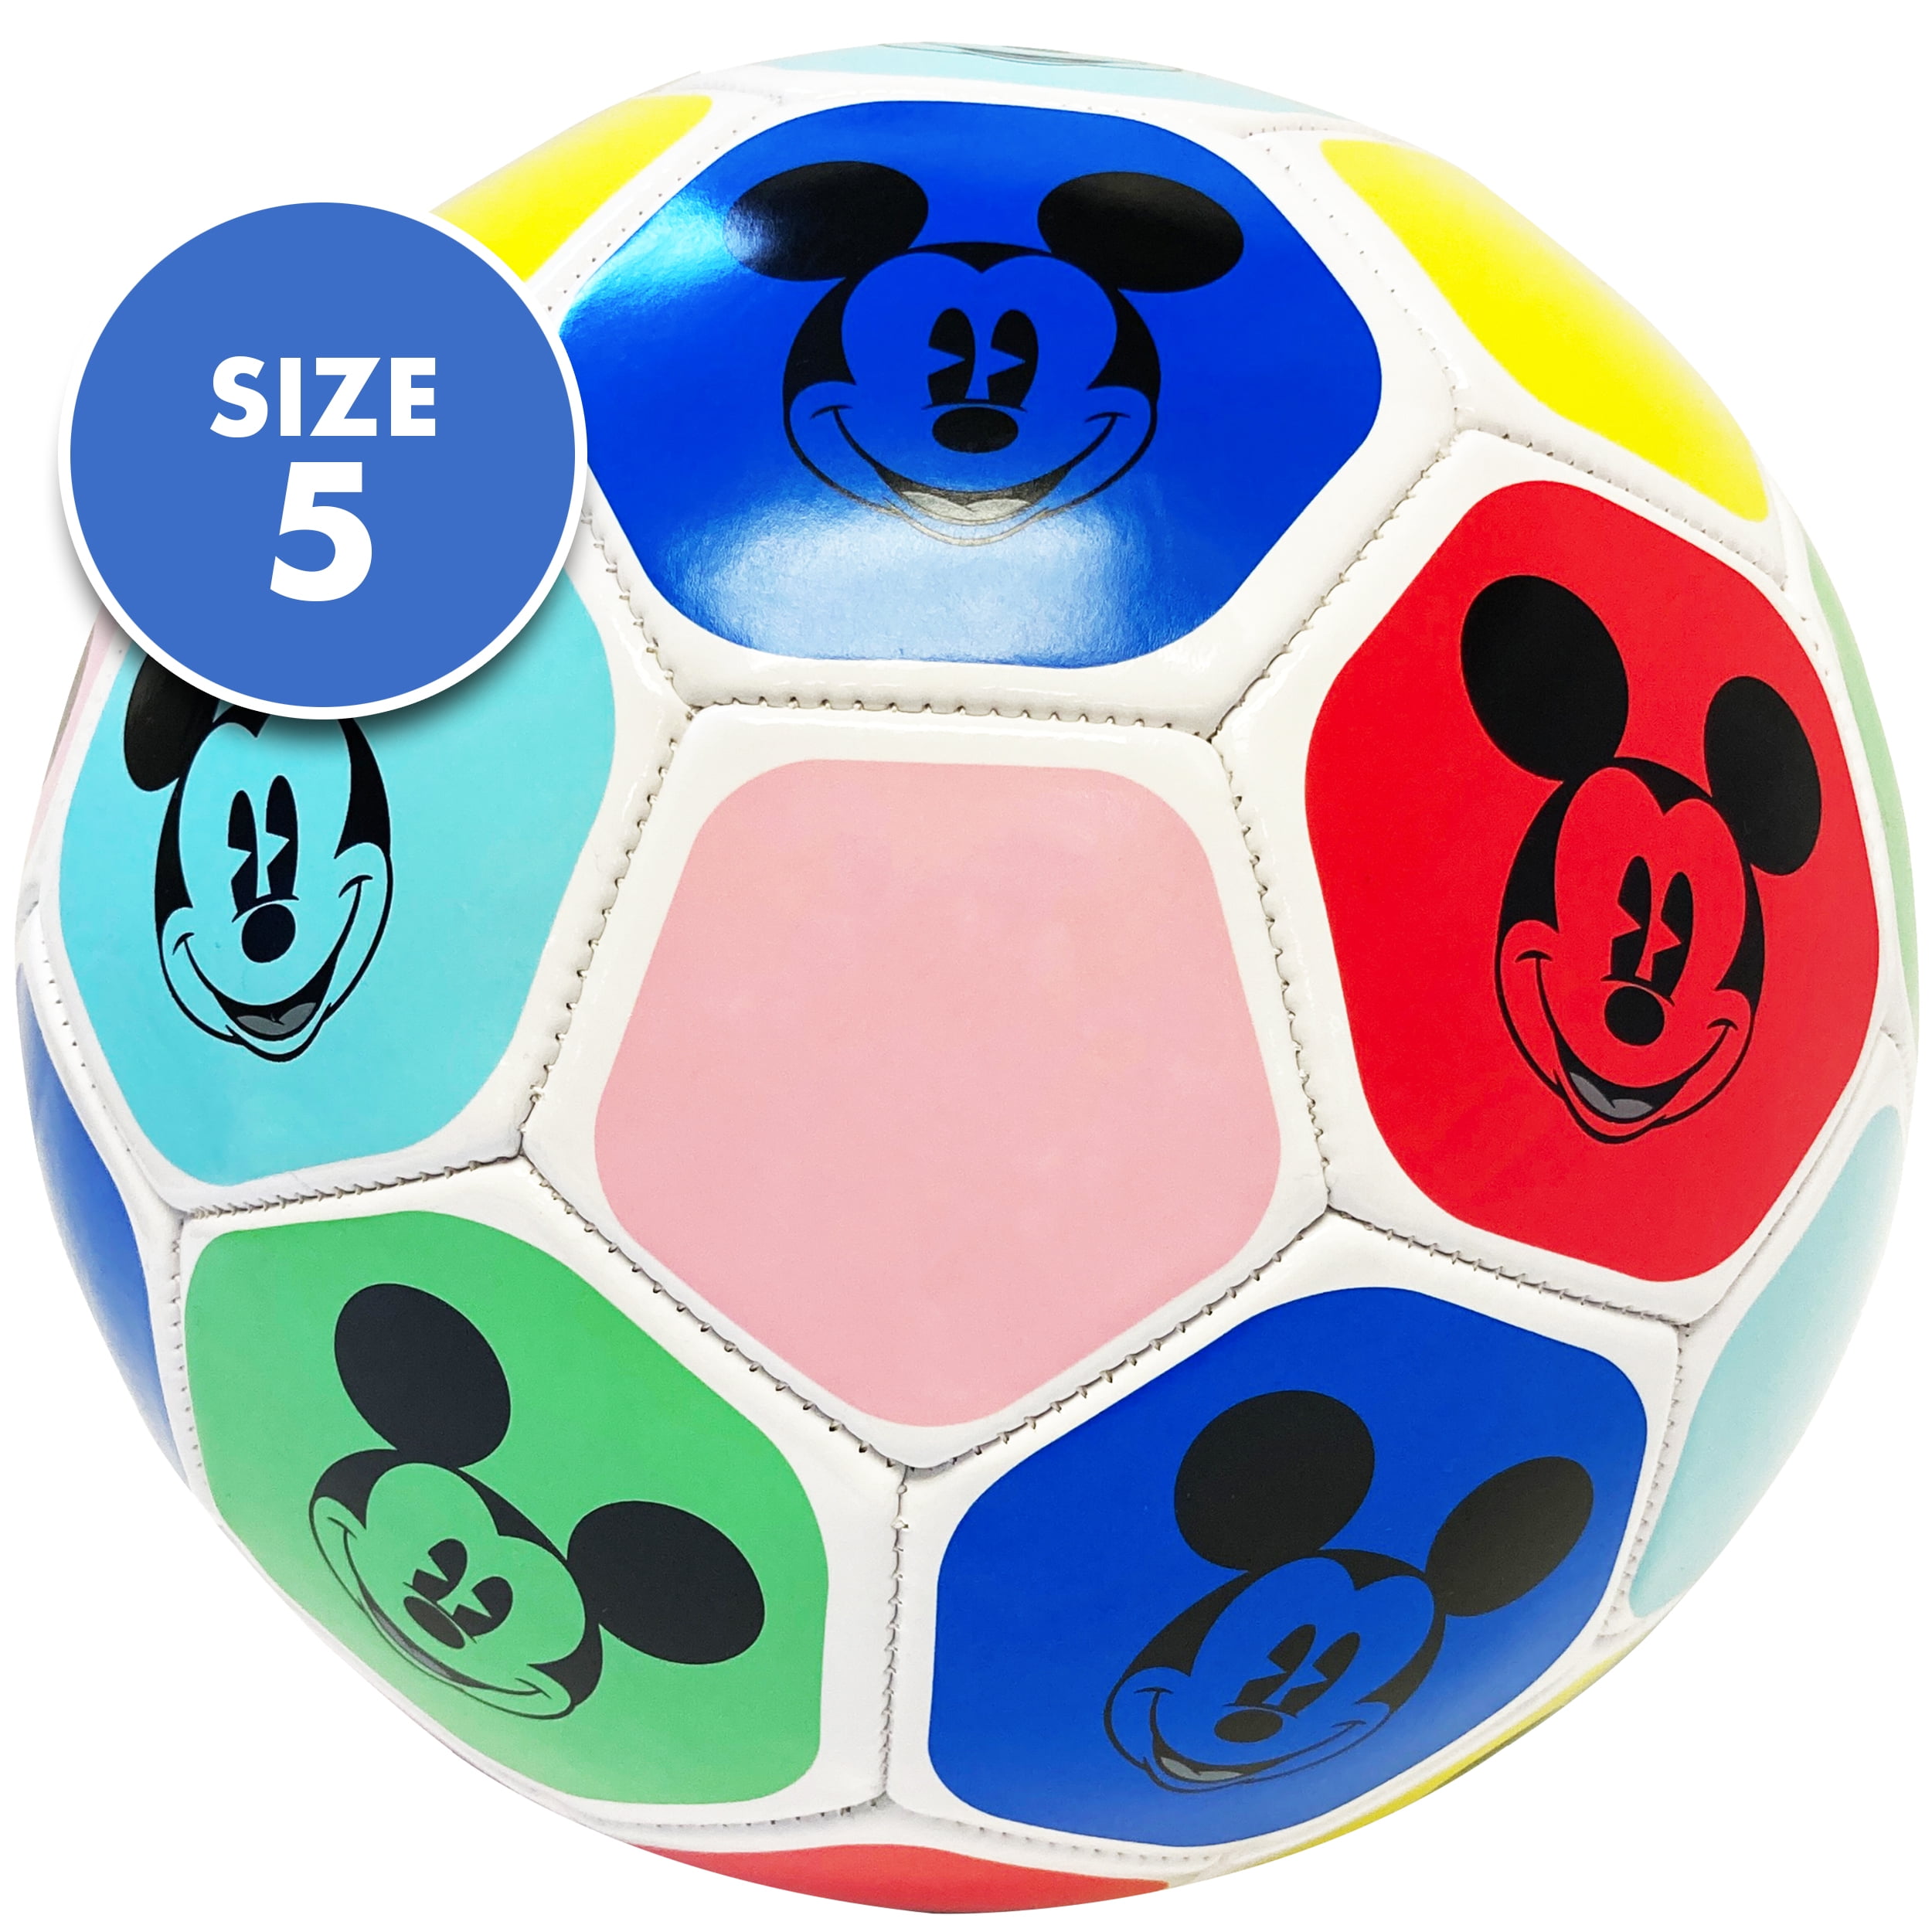 Soft Hand Stitch Size 1 Mini Soccer-Ball football For Kids 